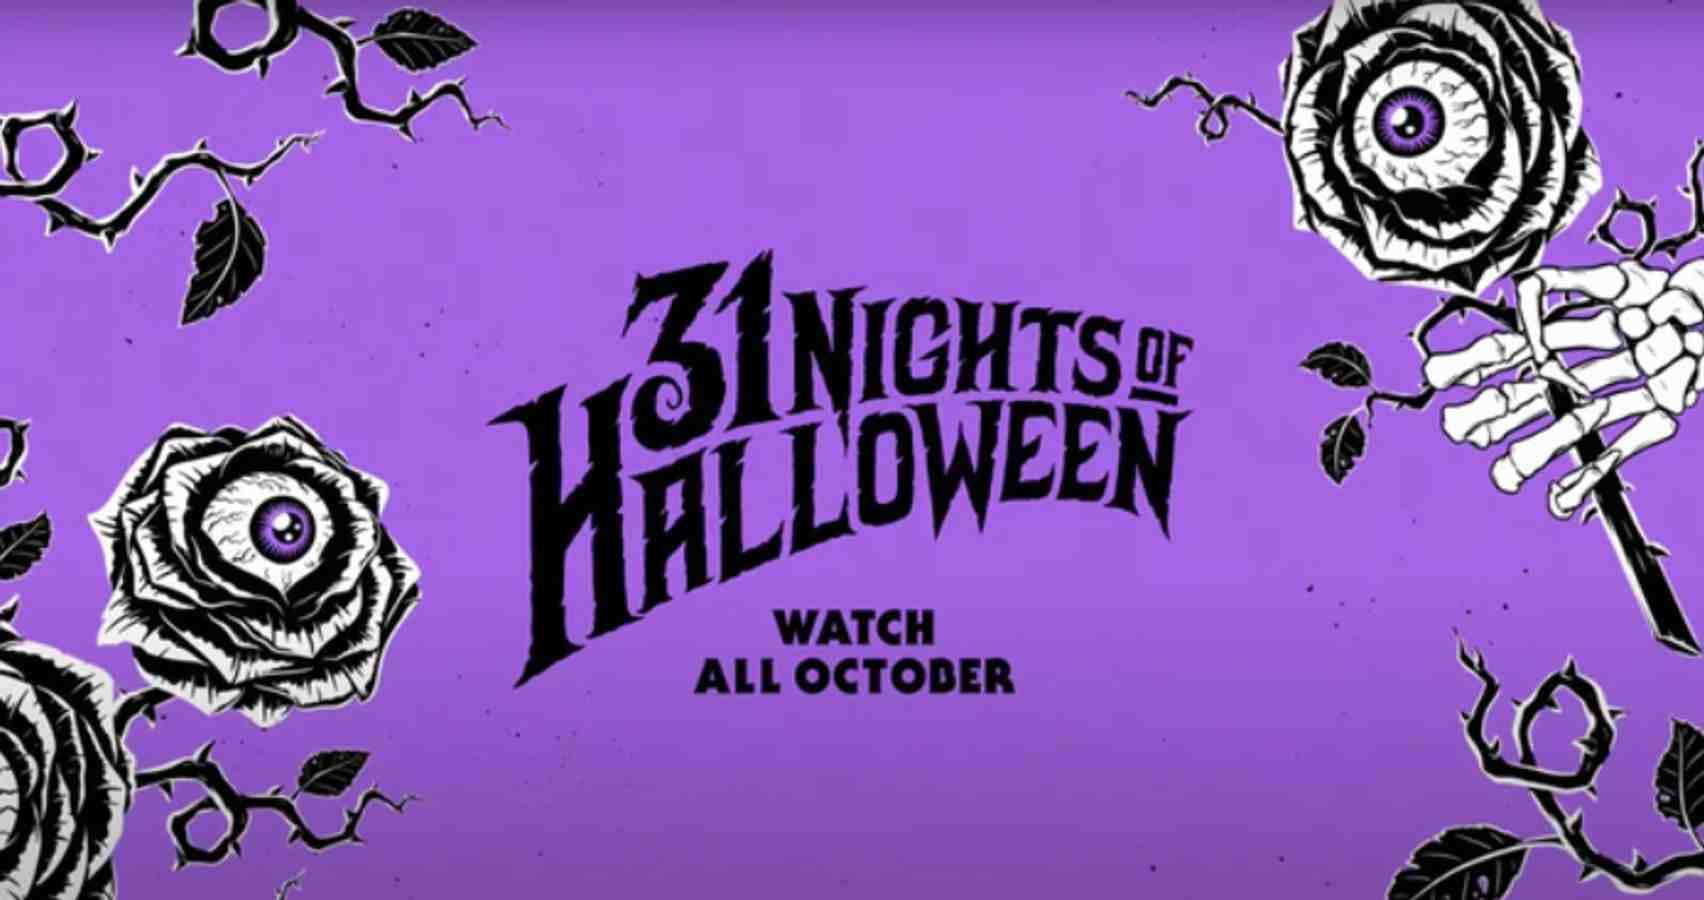 Freeform’s “31 Nights Of Halloween” Schedule Reviews